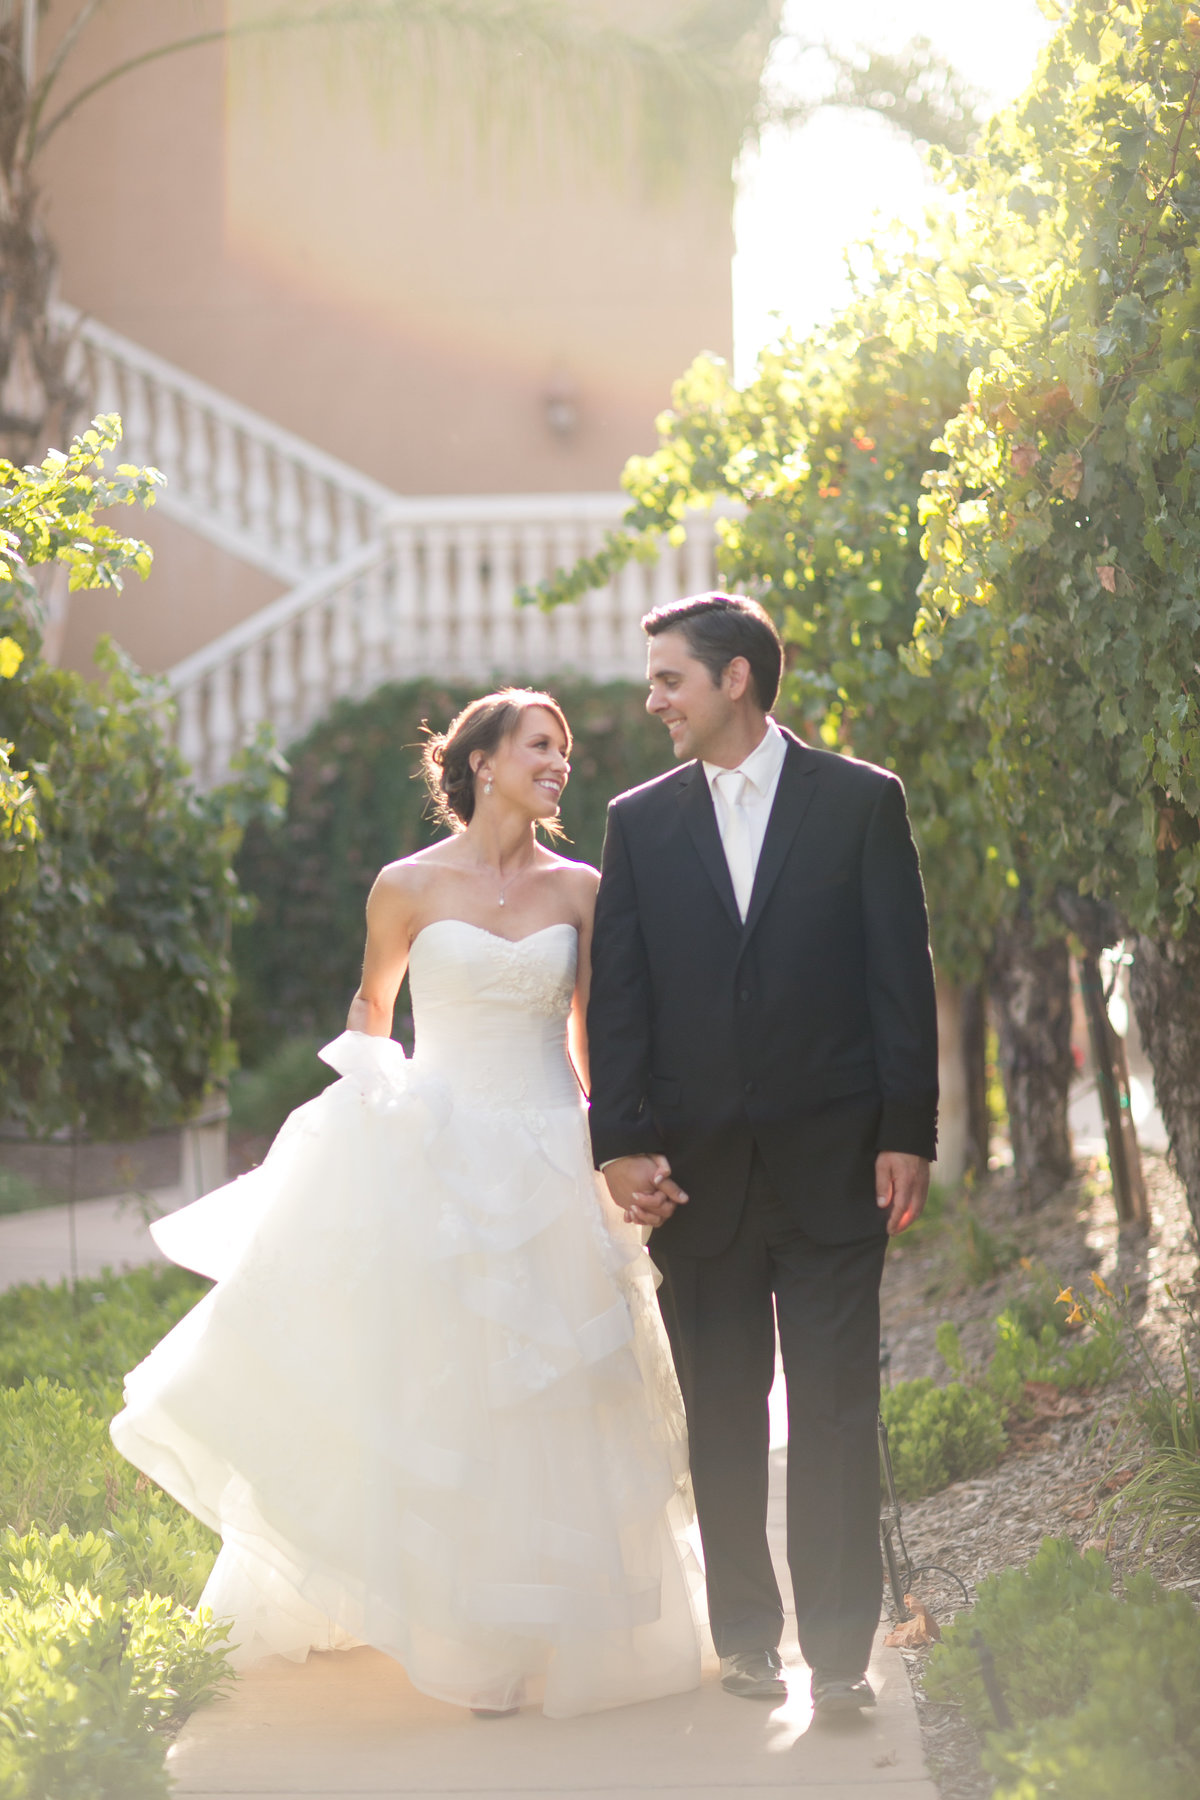 Bride and groom walking through a vineyard in Temecula California